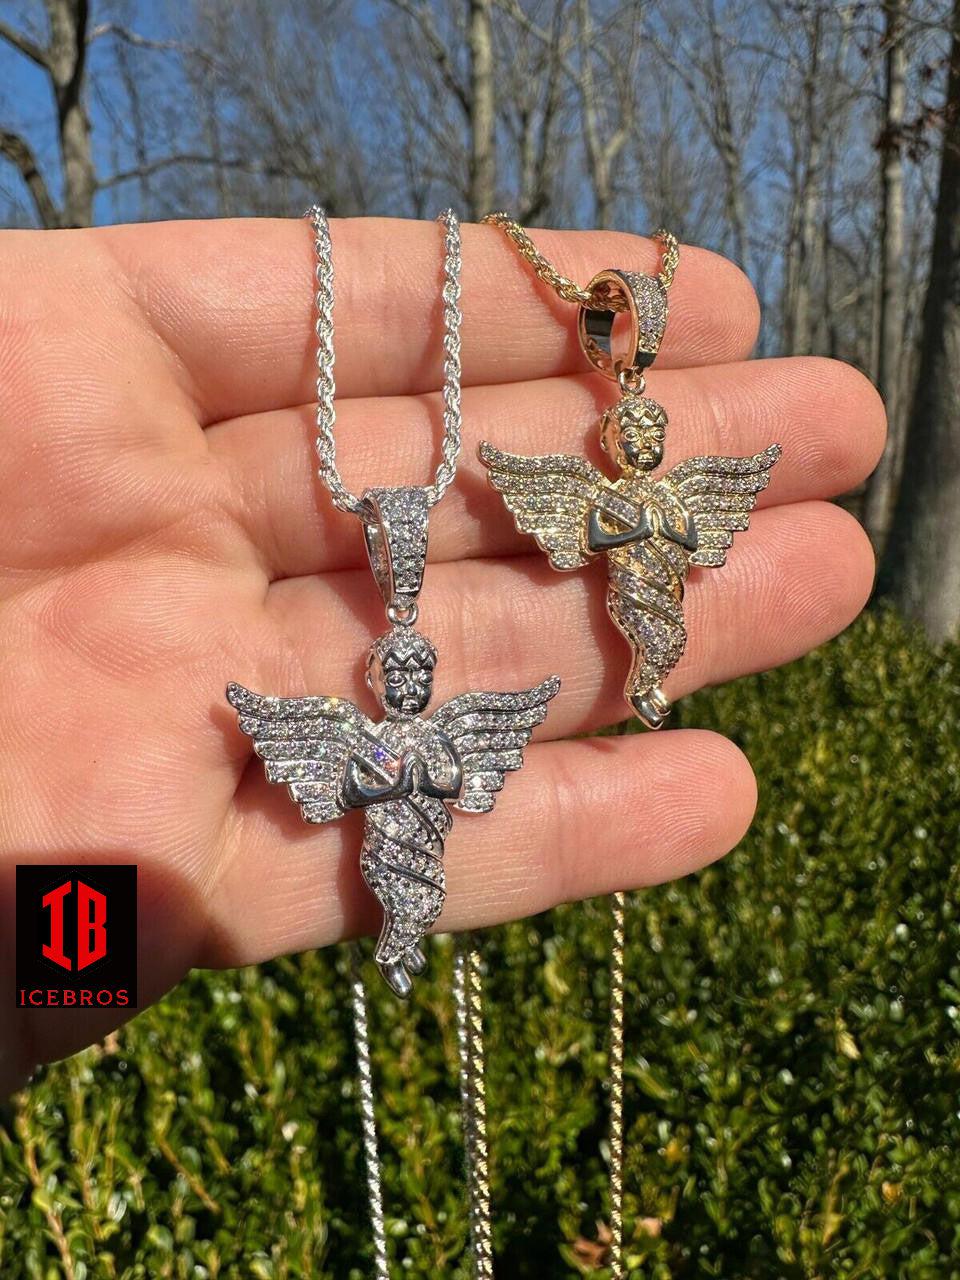 1.3ct Diamond Guardian Angel Cherub Pendant Solid 925 Silver Necklace Pendant